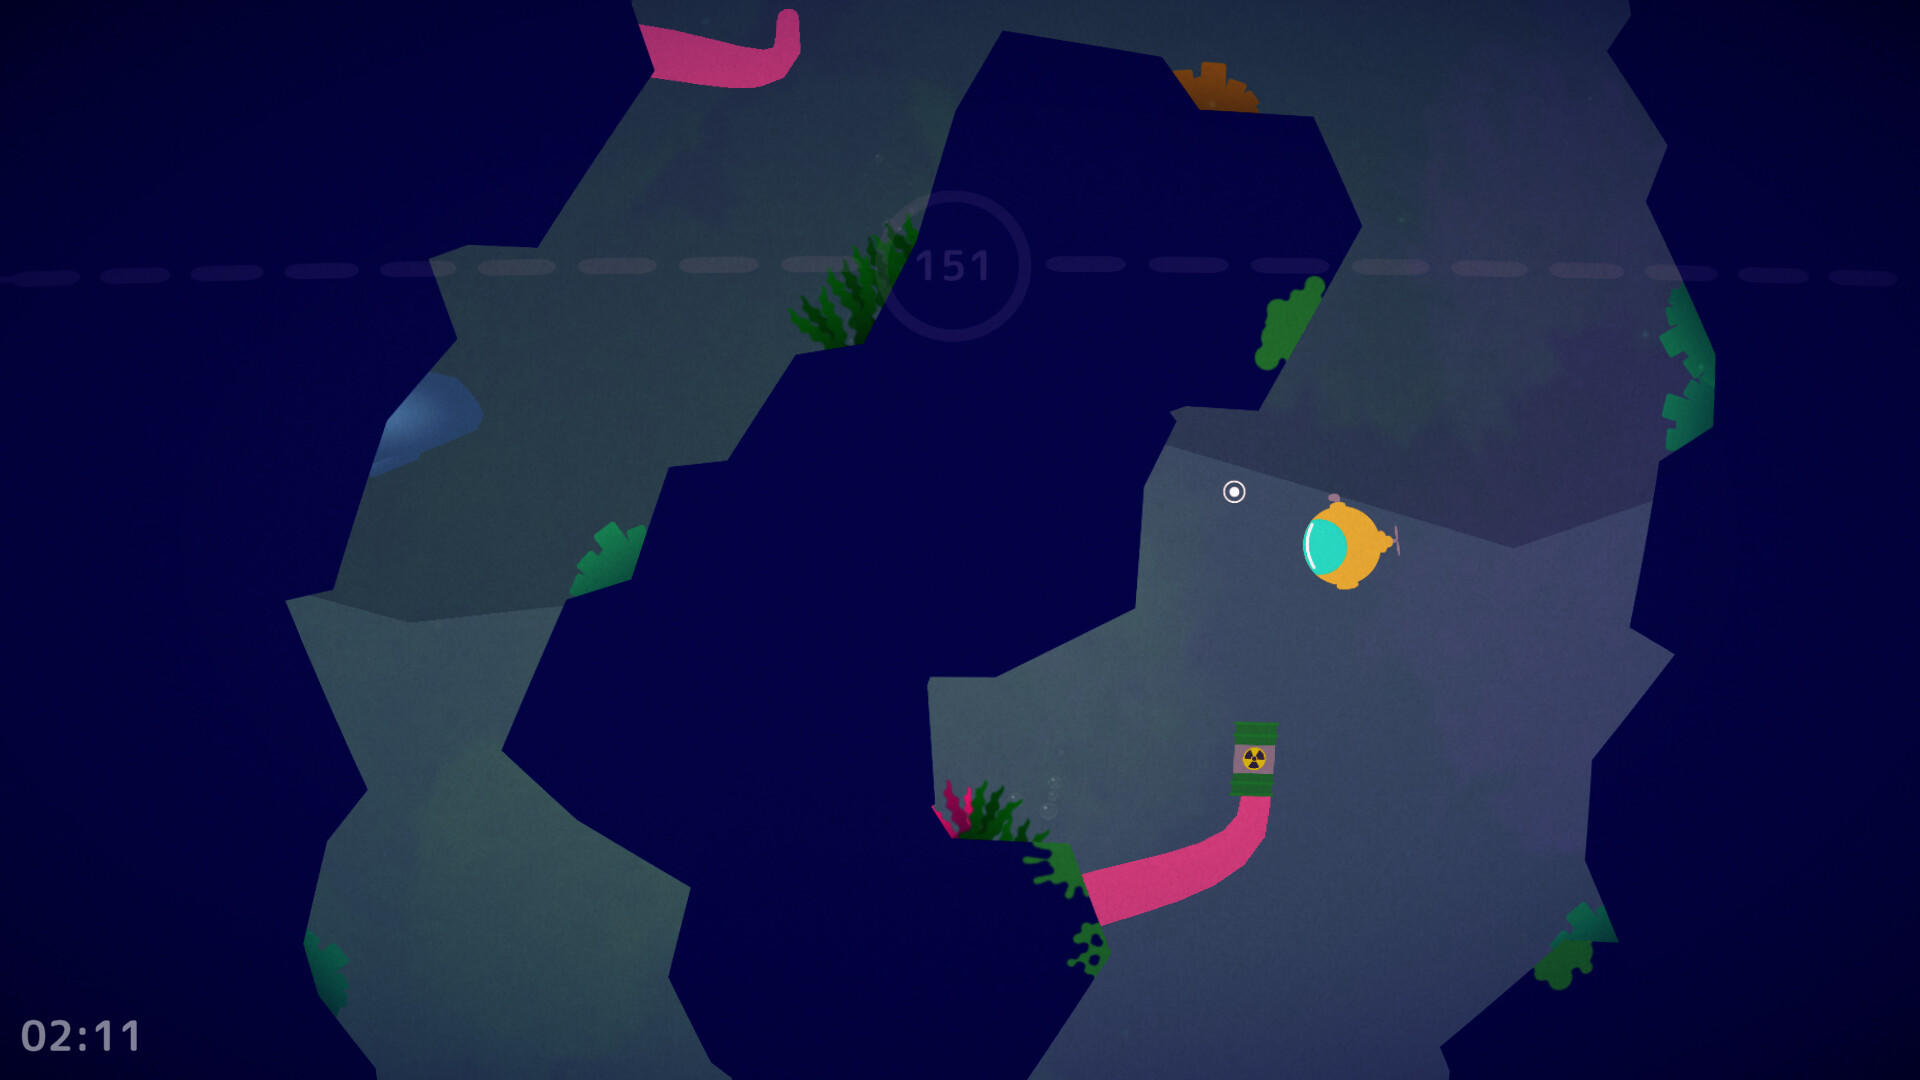 The Hookmarine screenshot game